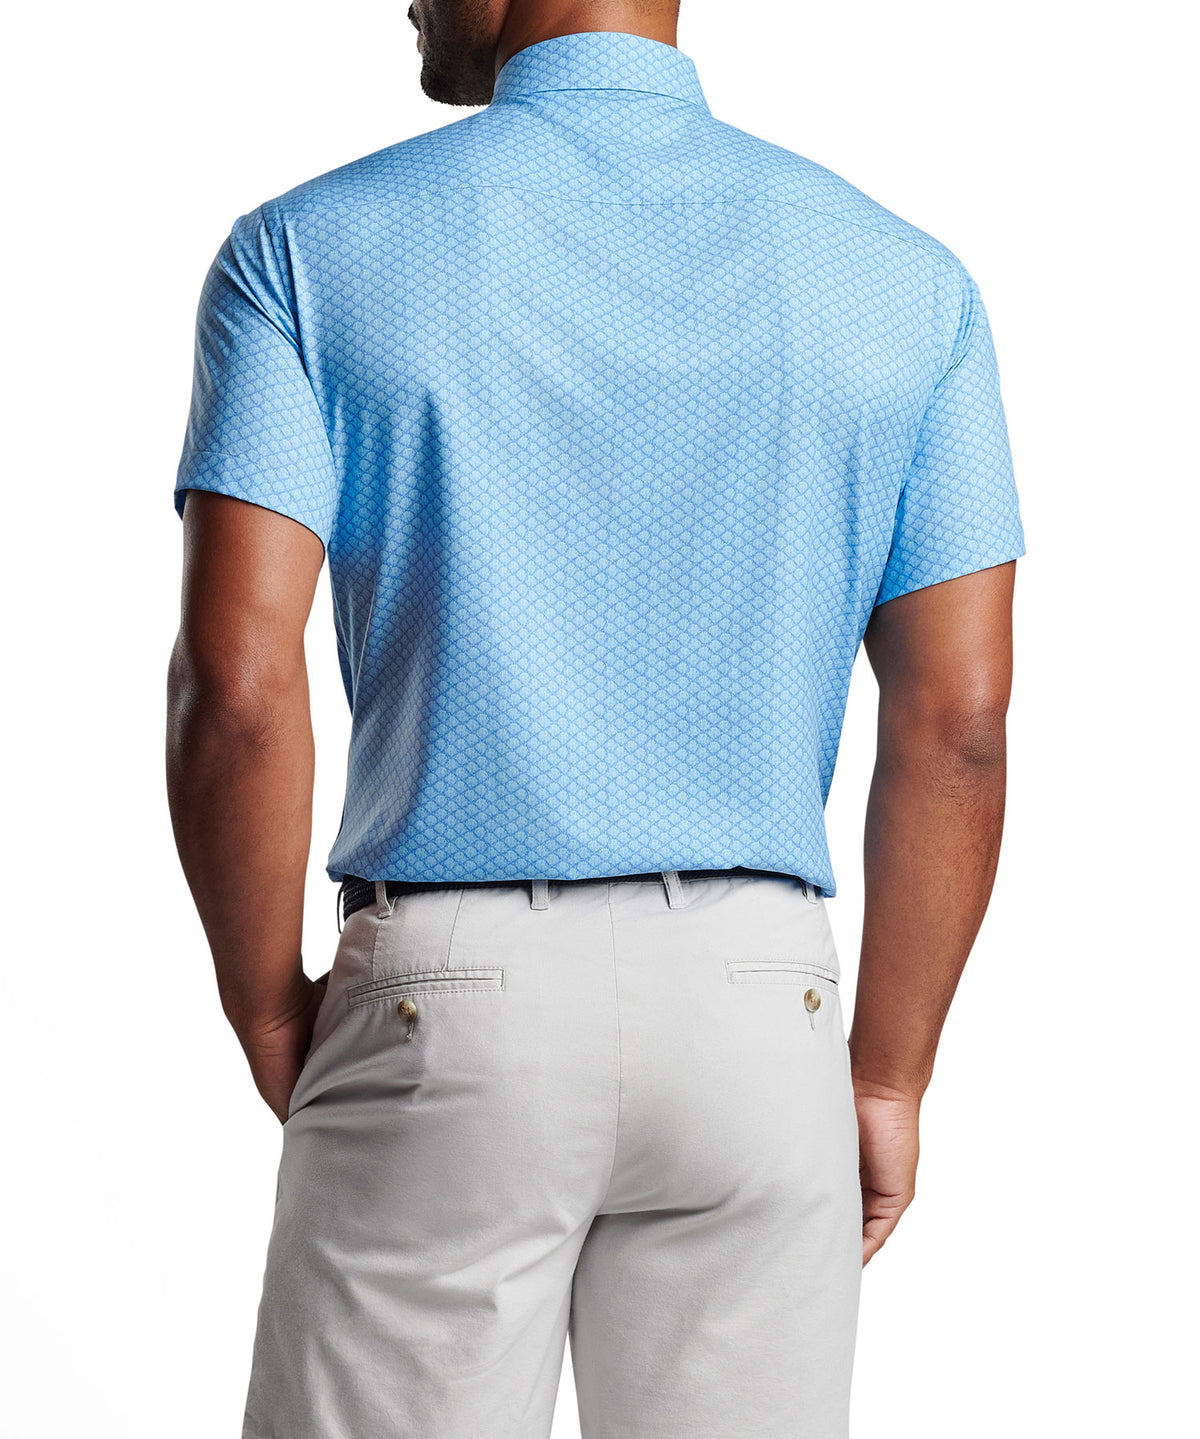 Peter Millar Clam Print Short Sleeve Spread Collar Sport Shirt, Big & Tall